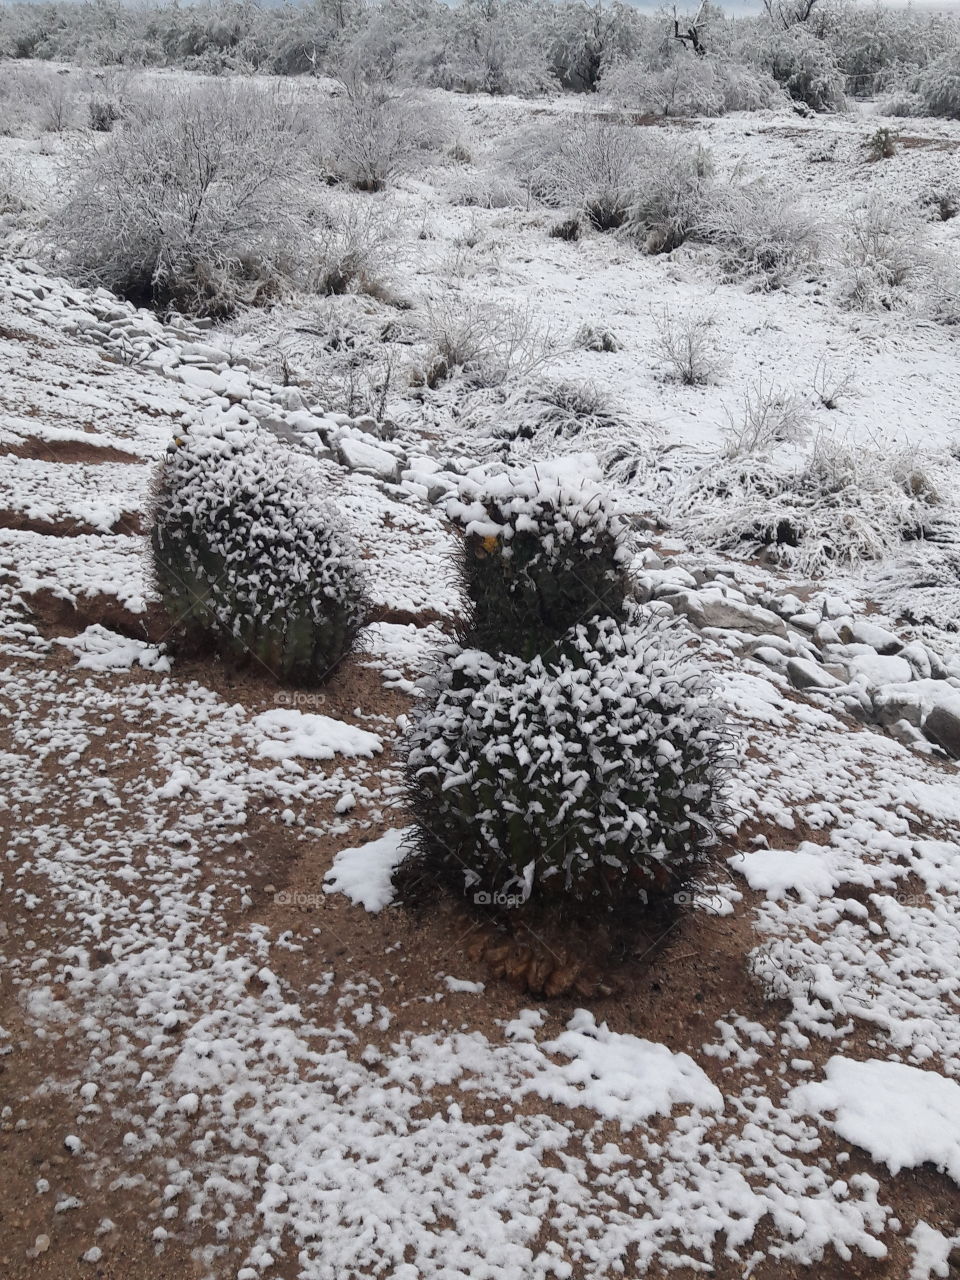 Snowy cacti